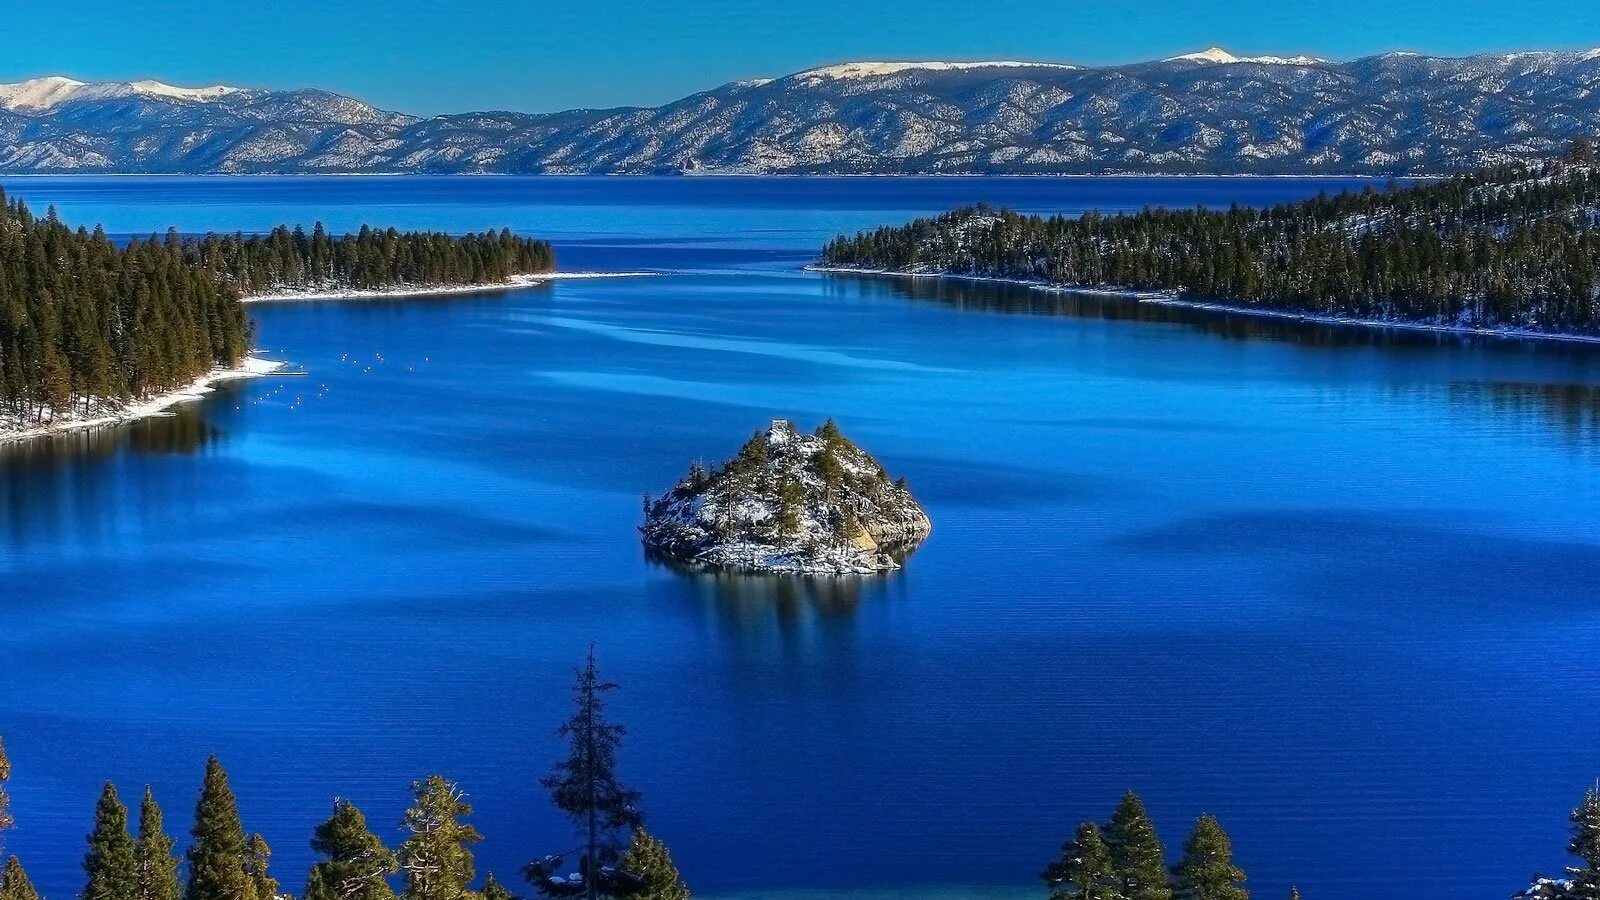 Сообщение о озерах северной америки. Озеро Тахо Северная Америка. Колорадо озеро Тахо. Озеро Тахо Калифорния. Озеро Тахо, Невада, США.